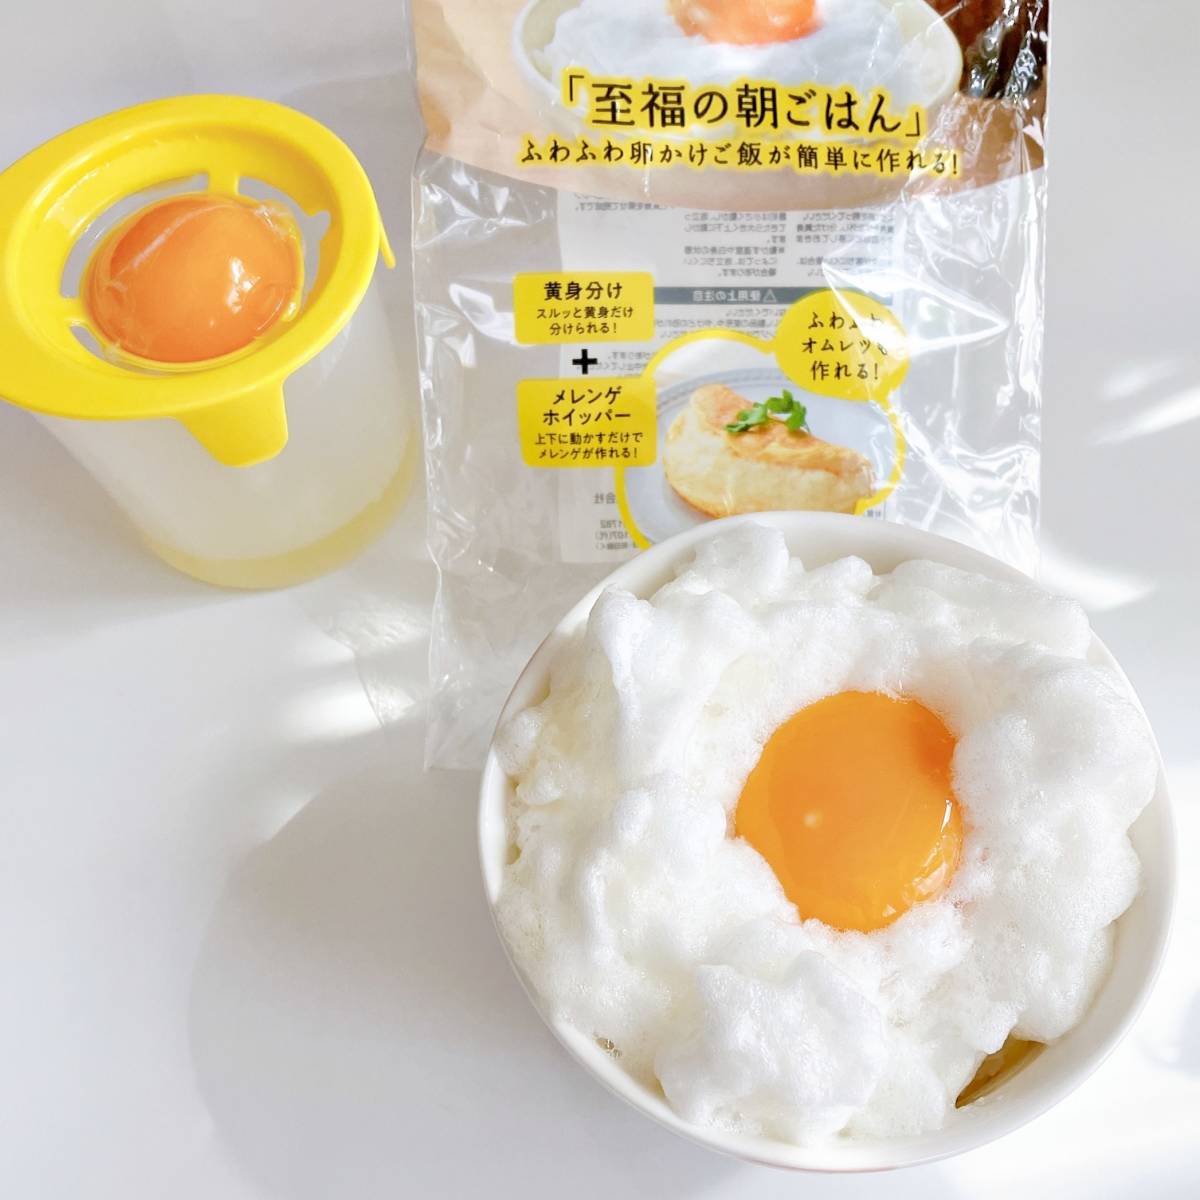  soft eg Manufacturers me Chinese milk vetch egg new goods unopened TKG Homme retsu ho ipa- whisk egg .. rice sponge cake confectionery Tama . sphere .